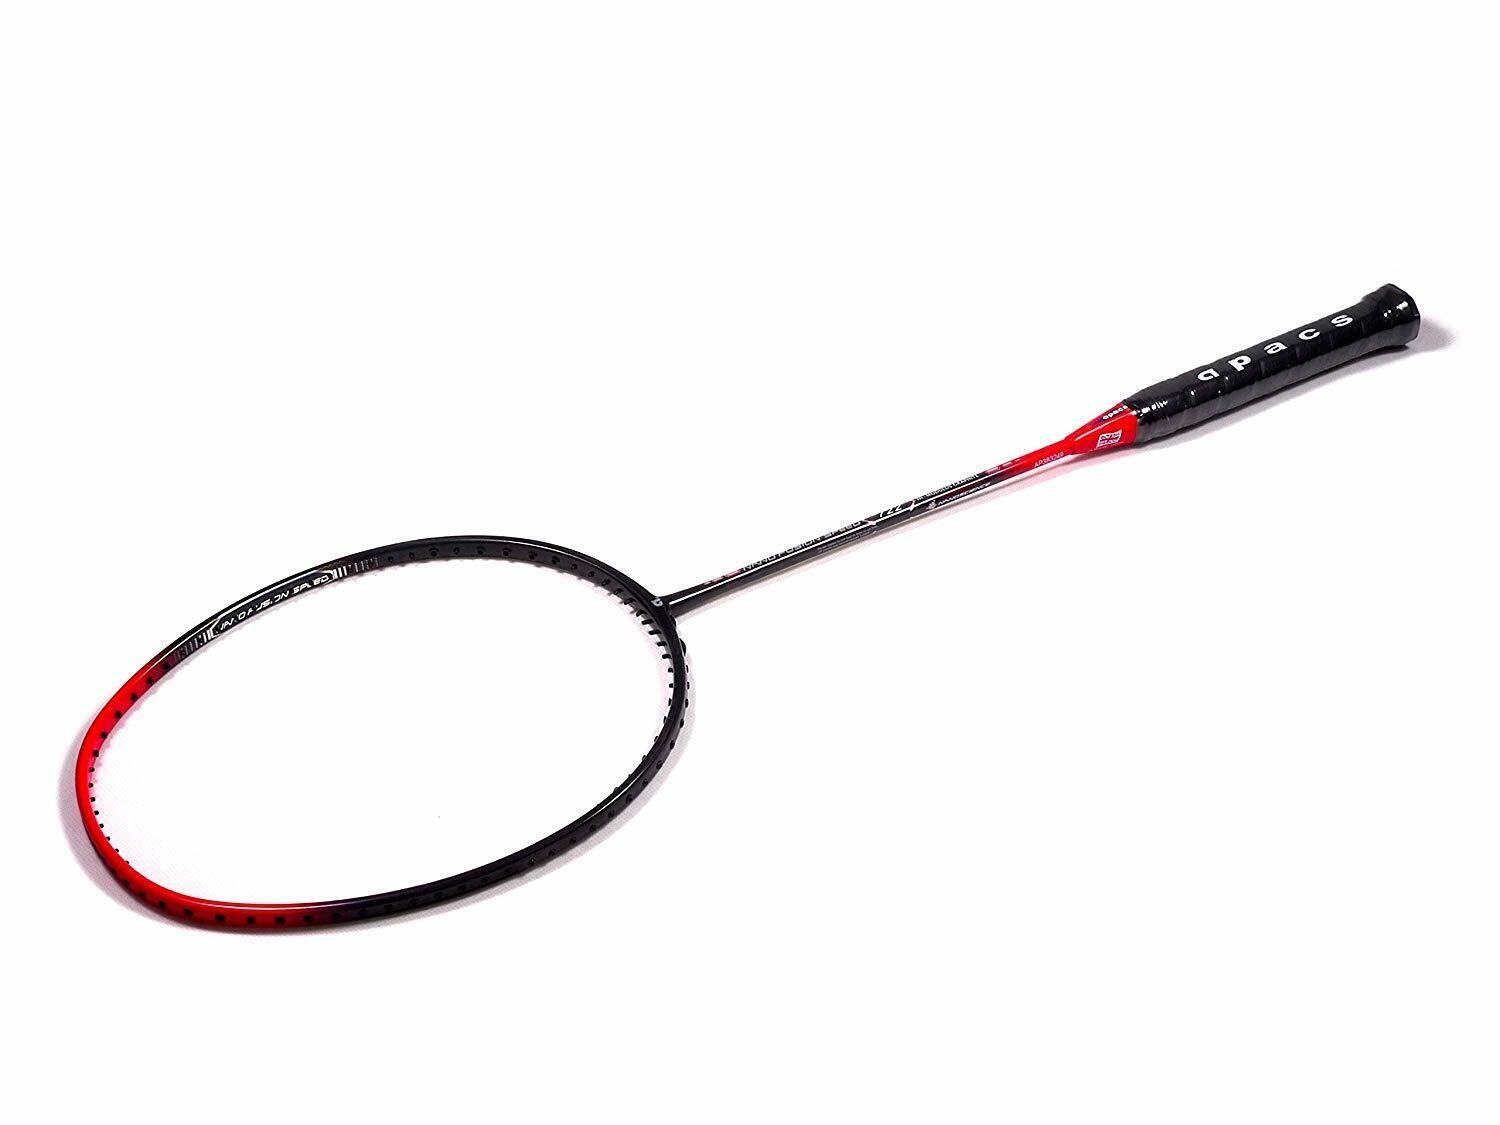 Apacs NANO FUSION SPEED 722 (Black and Fluorescent Orange) Badminton Racket